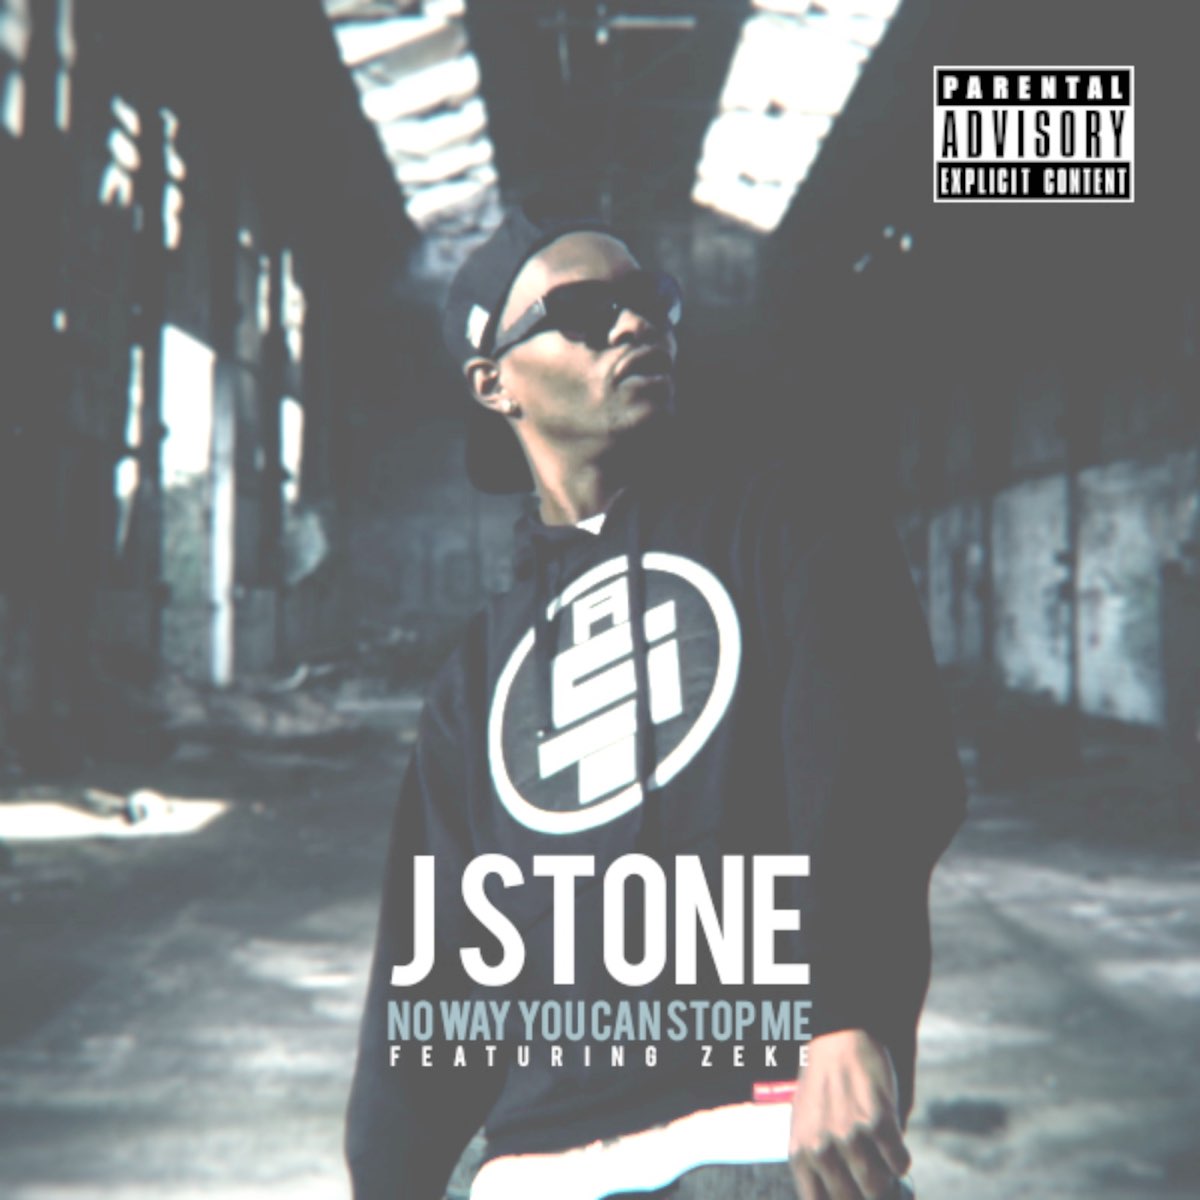 J stone